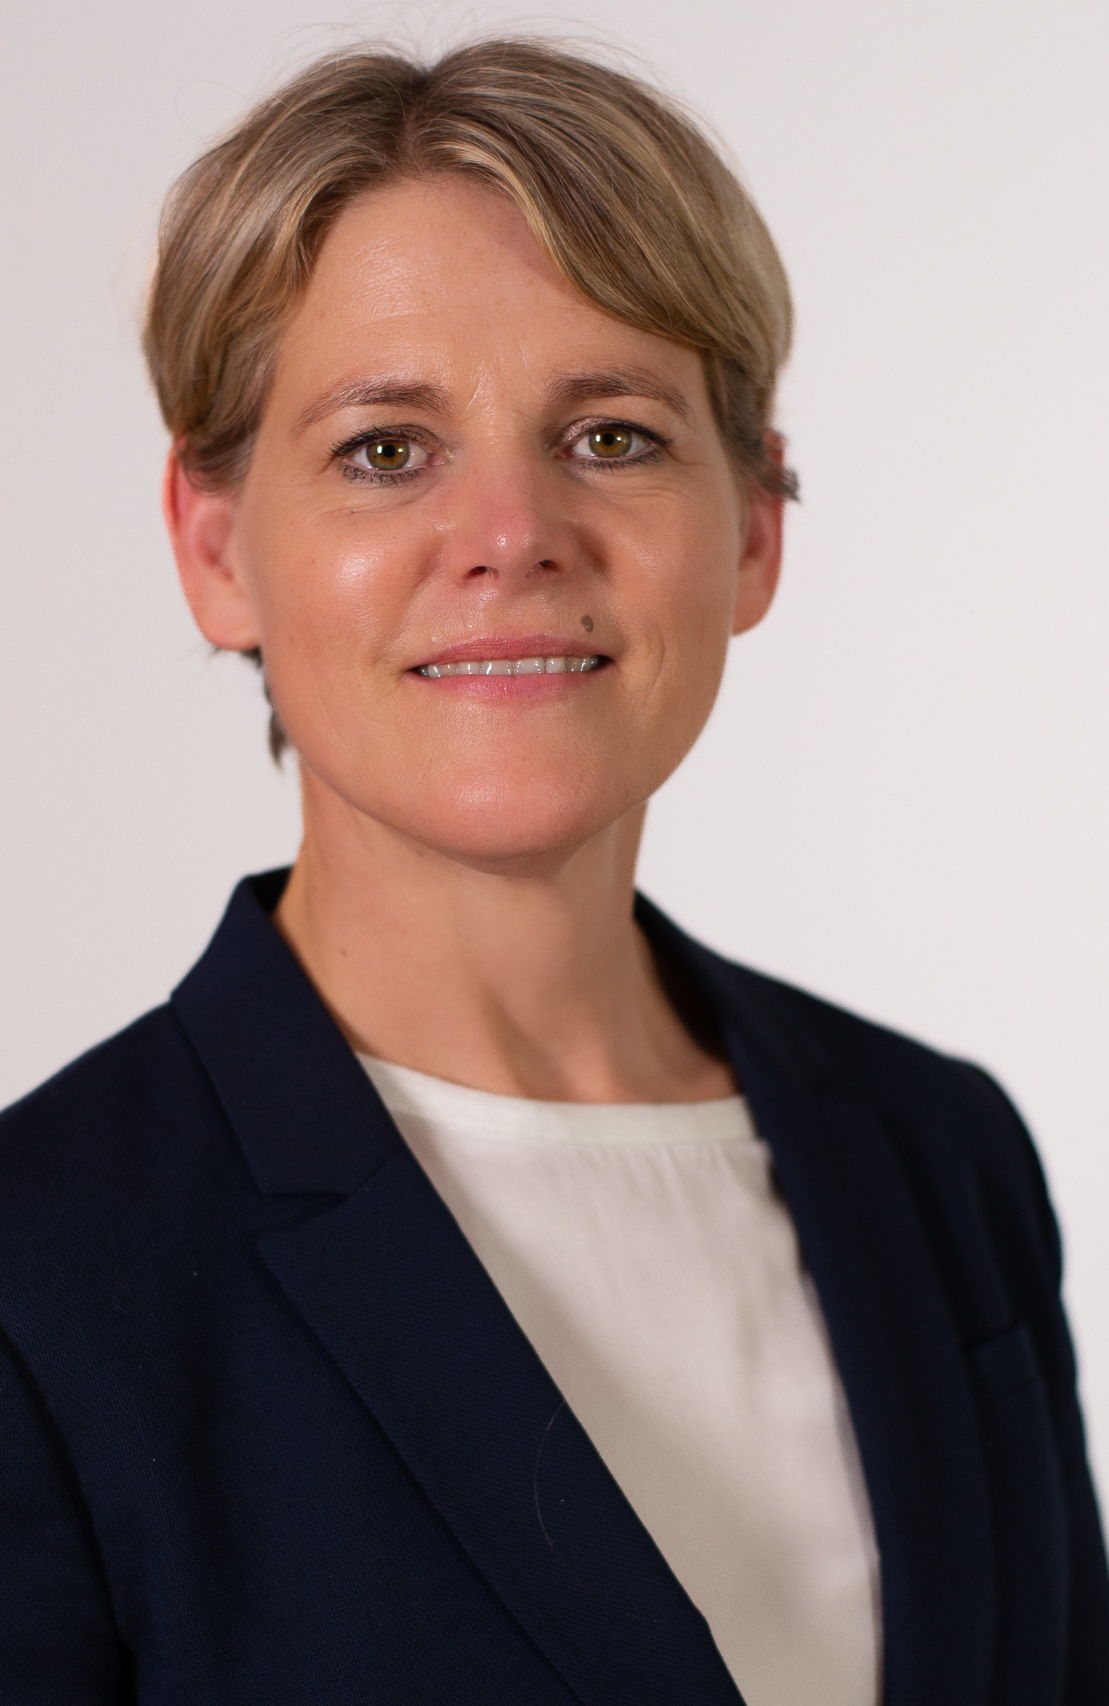 Susanne Klinger-Werner benoemd tot nieuwe president van UPS Supply Chain Solutions (SCS) Europe